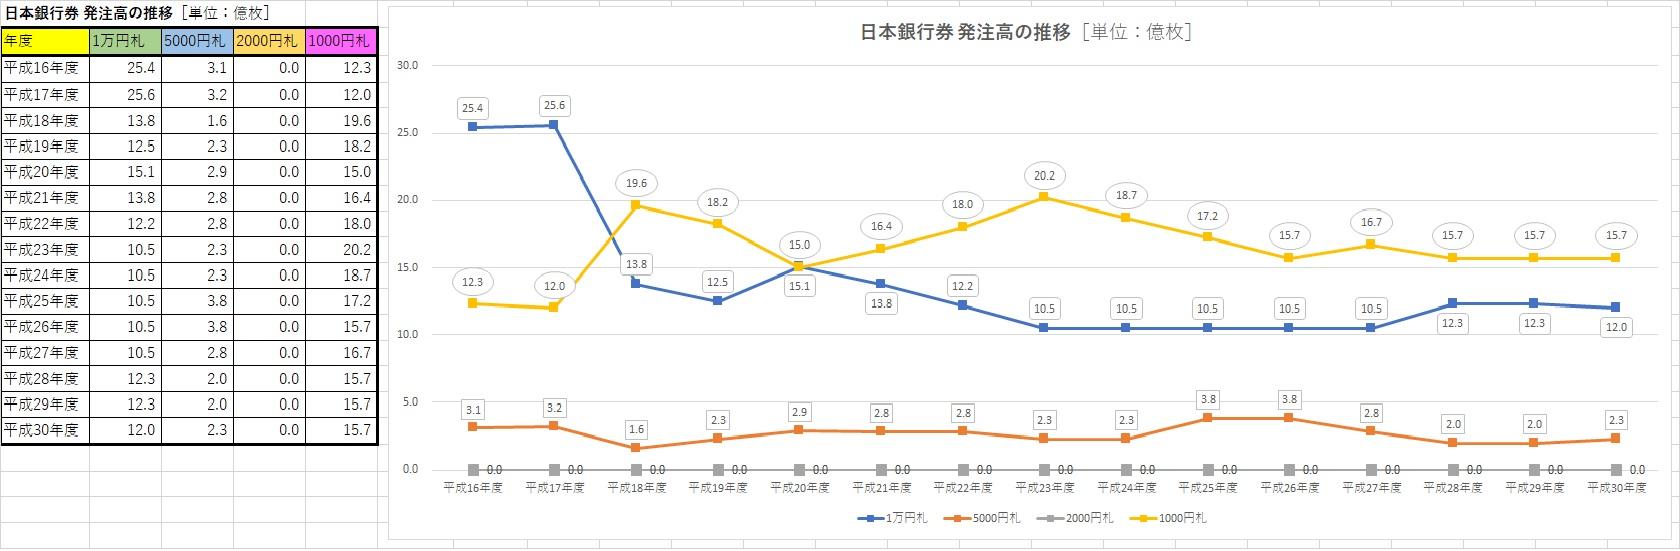 http://tablo.jp/culture/img/graph01-a.jpg